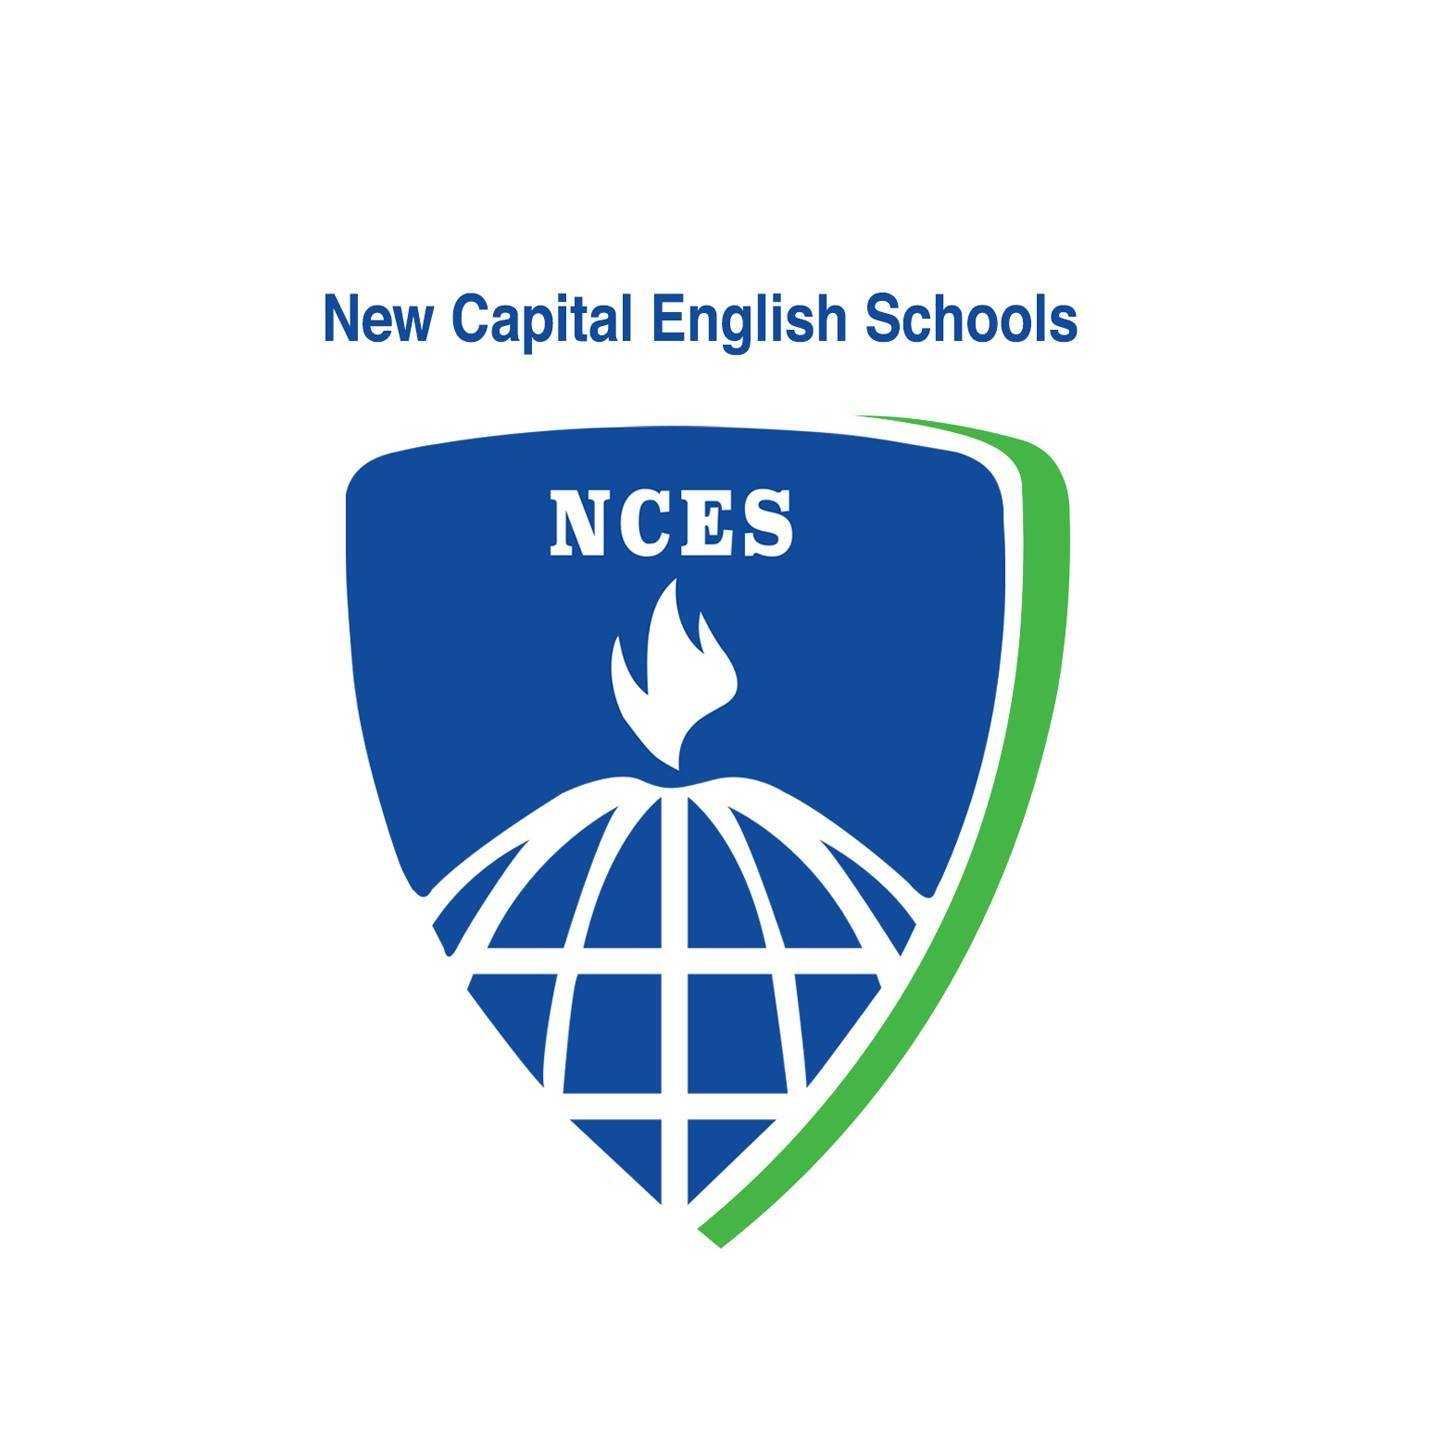 New Capital English Schools